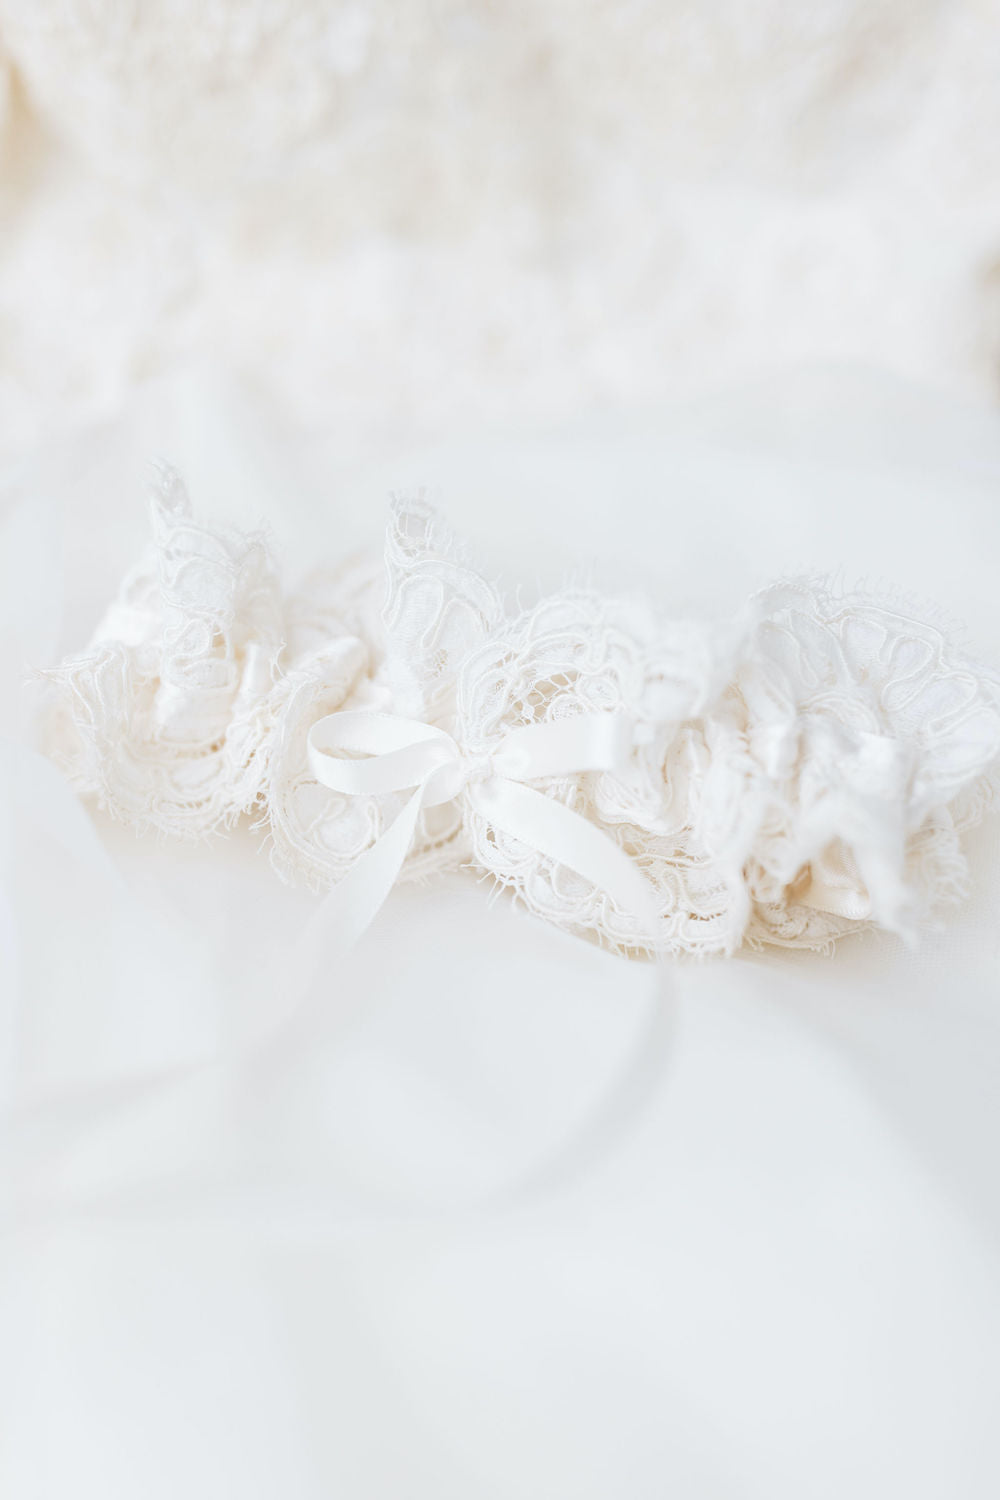 from mom's lace wedding dress ivory wedding garter heirloom handmade by The Garter Girl